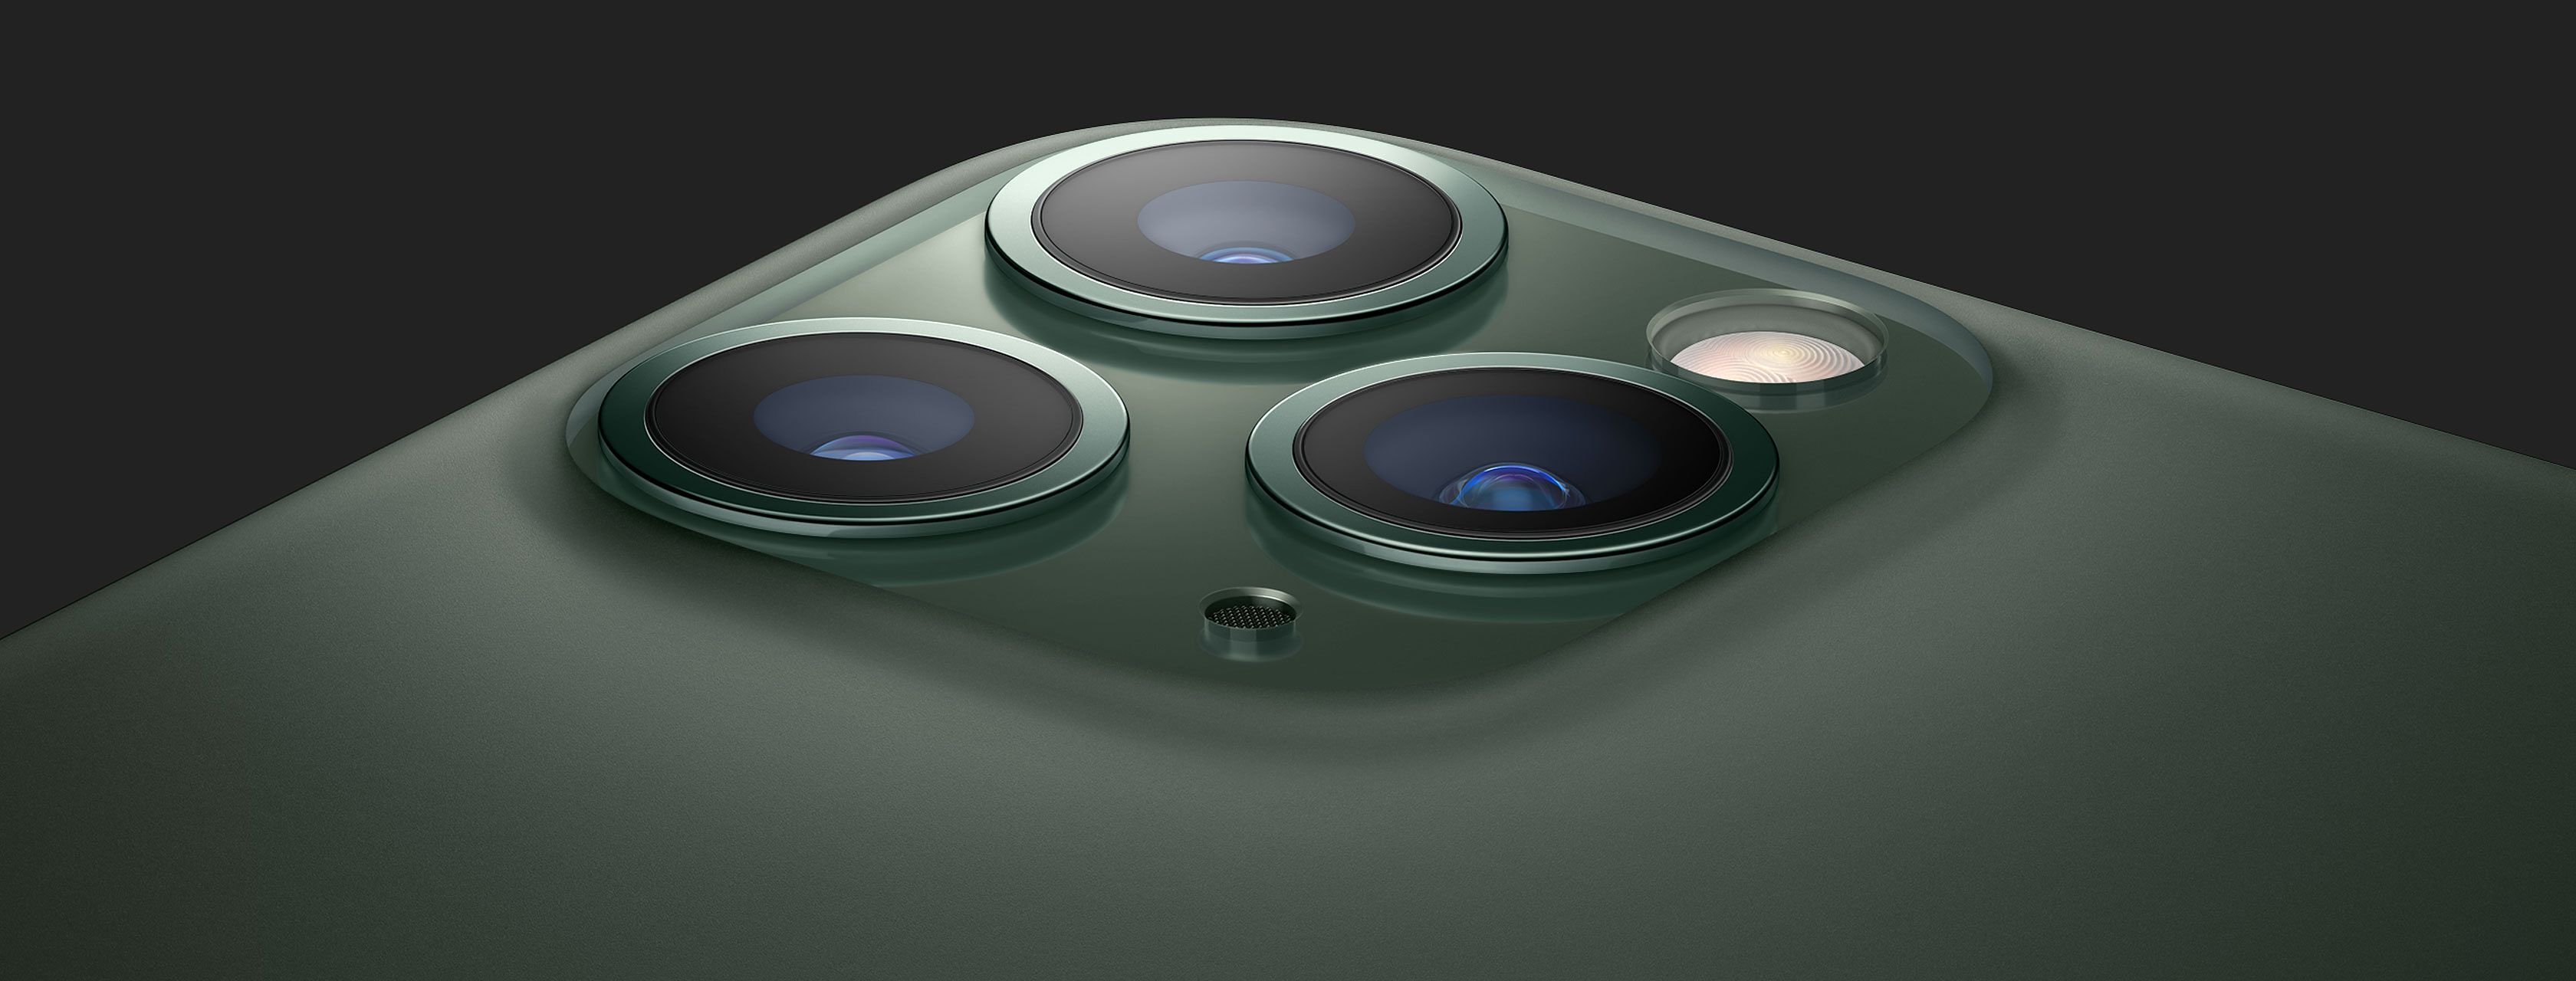 iPhone 11 Pro cámaras posteriores